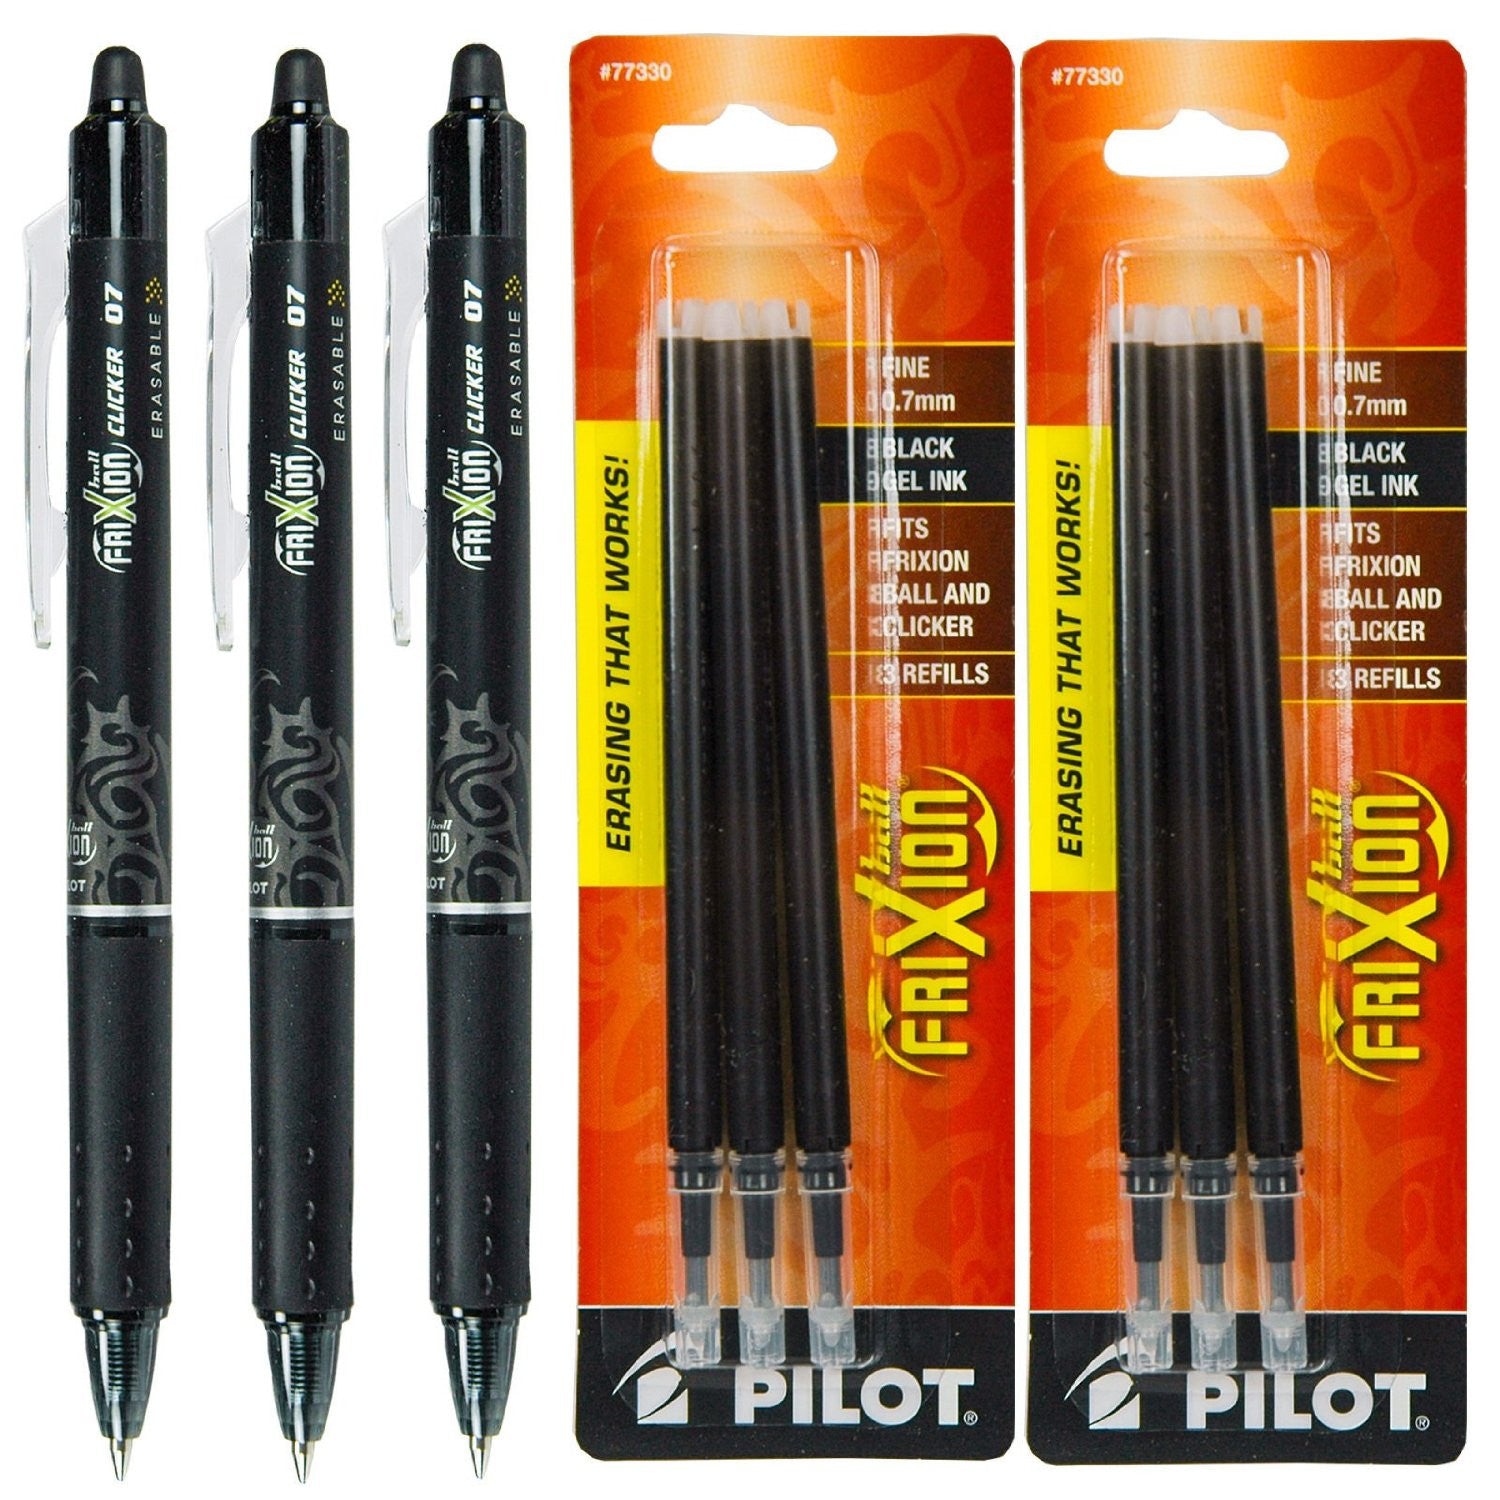 Erasable Gel Pens 14 PACK Assorted Colors Retractable Clicker Gel Ink Pens  0.7mm